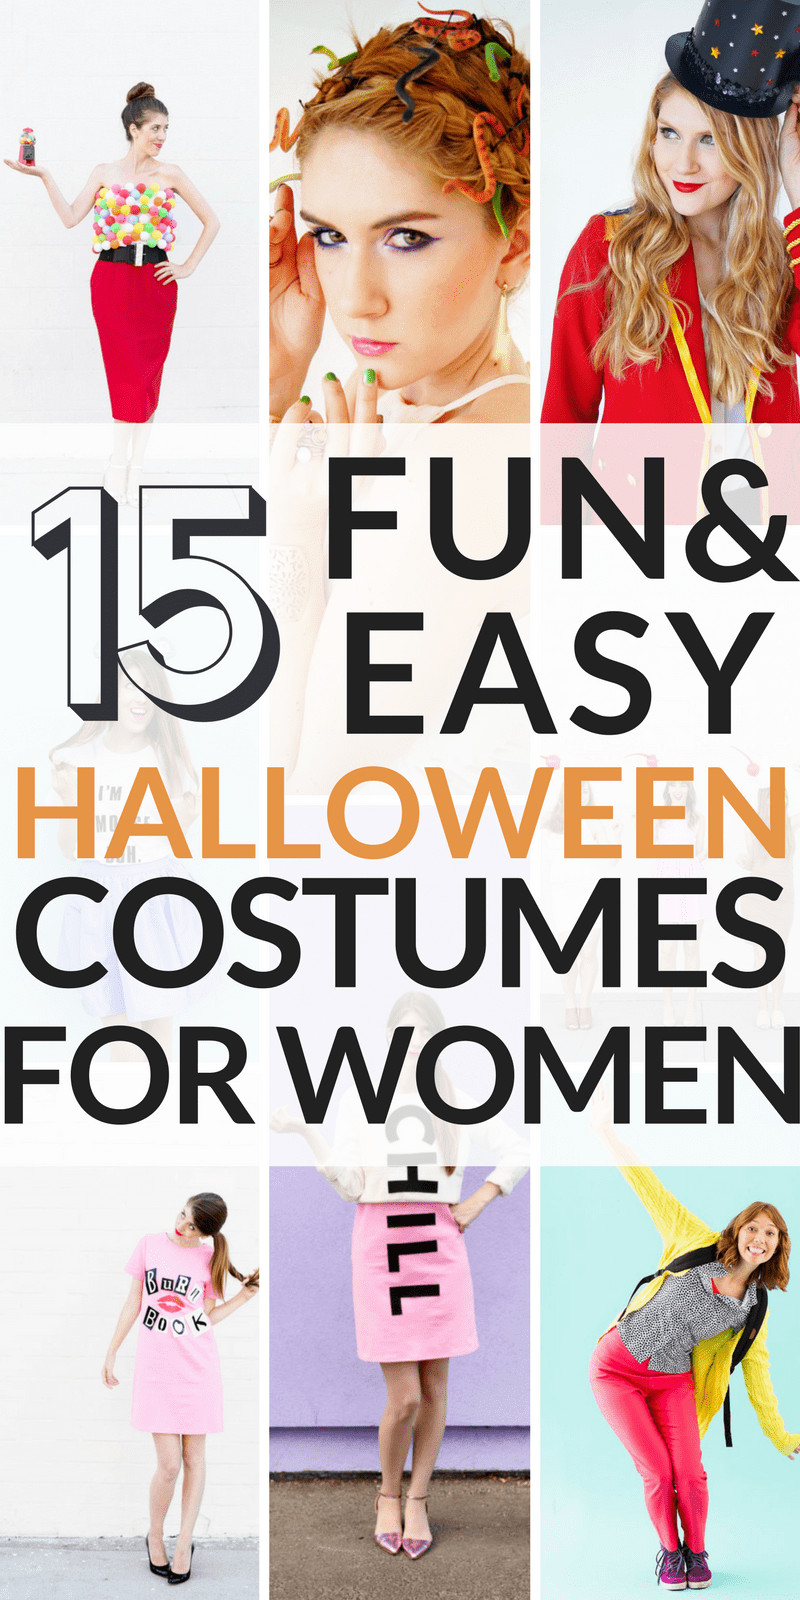 Easy Diy Halloween Costumes For Women
 15 Cheap and Easy DIY Halloween Costumes for Women